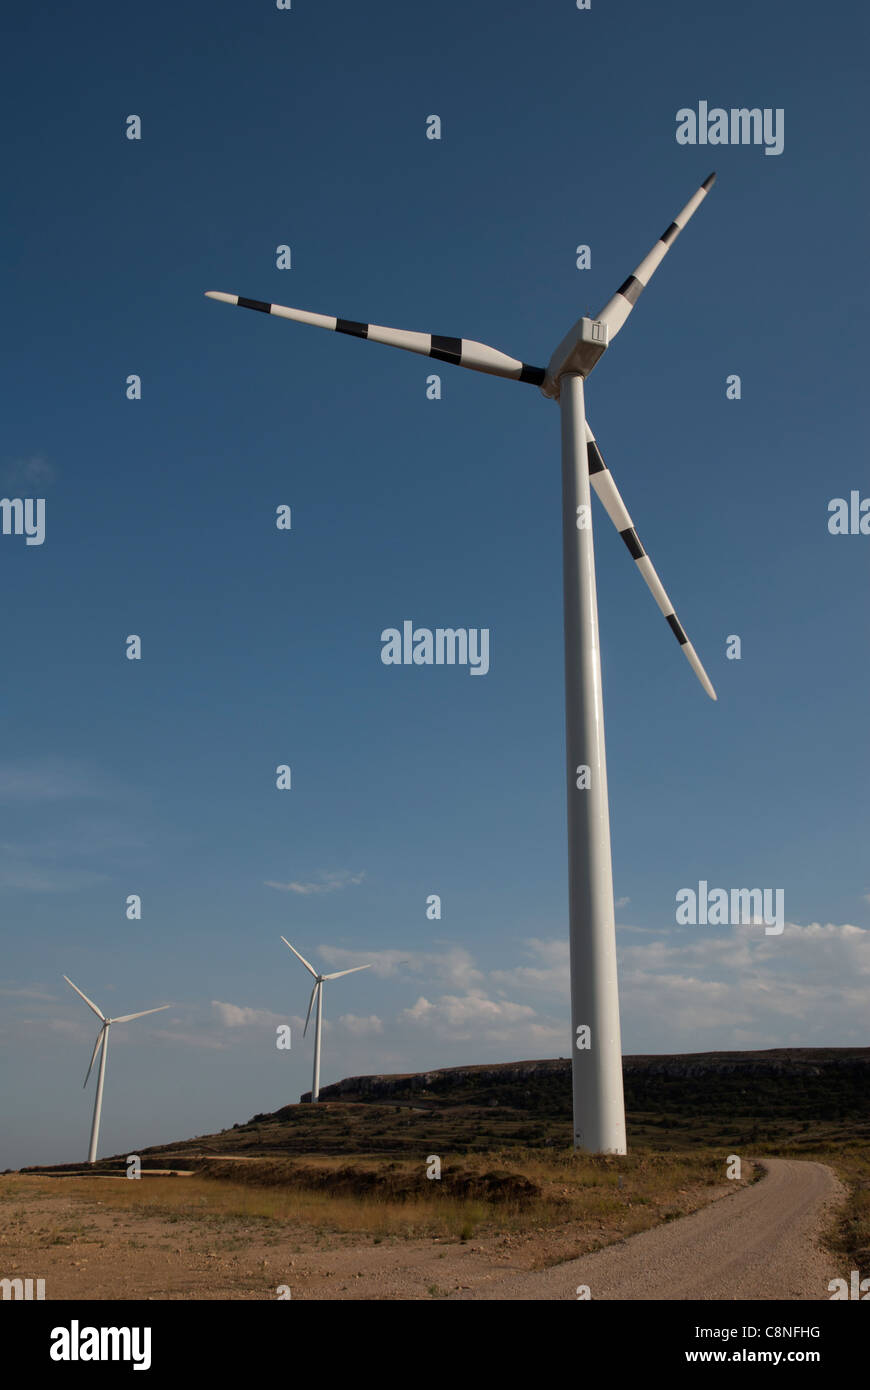 Spain, Maestrazgo, wind turbine next to country road Stock Photo